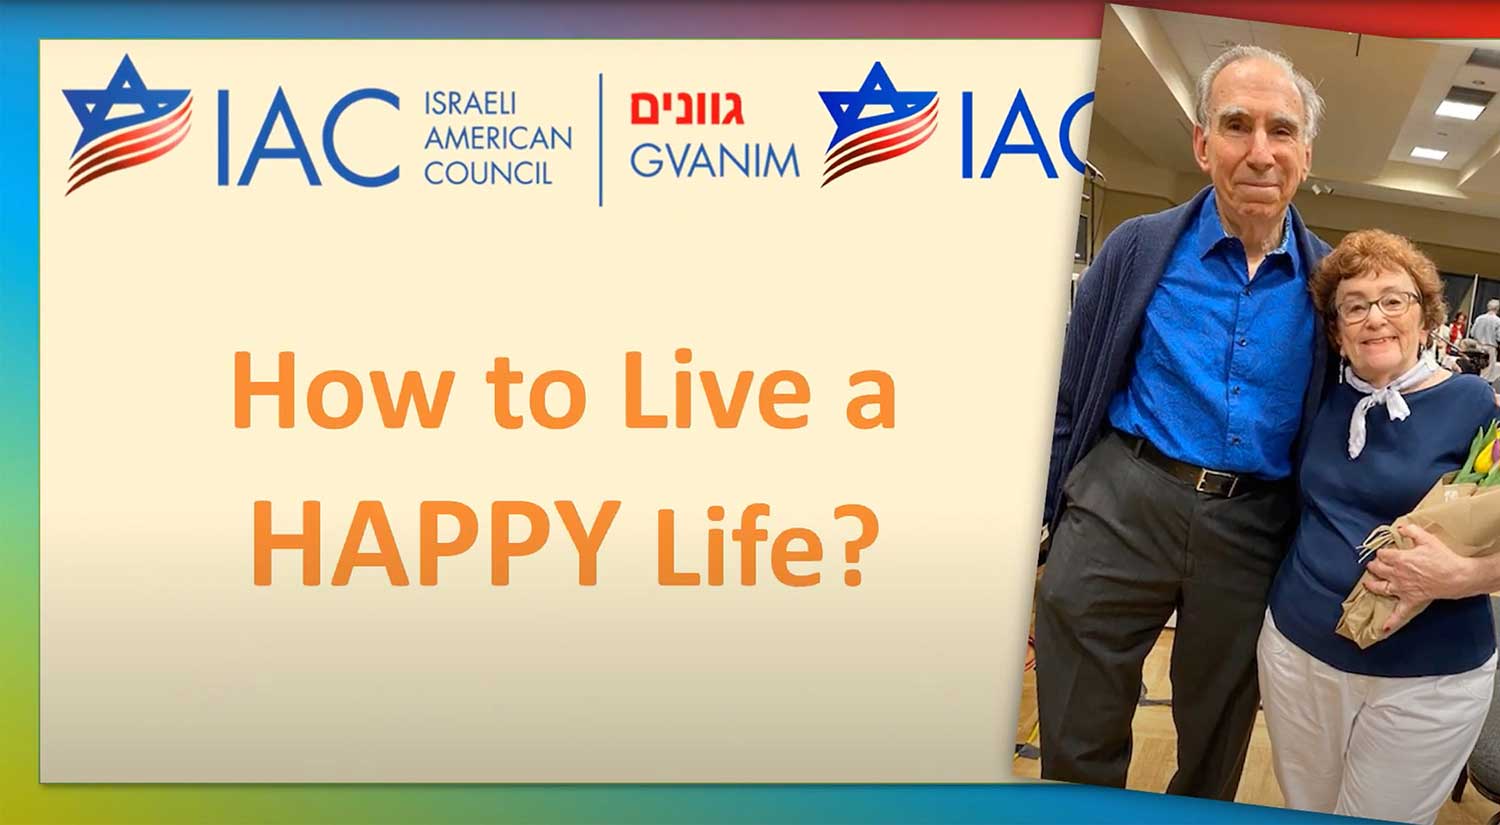 IAC Happy Life Video